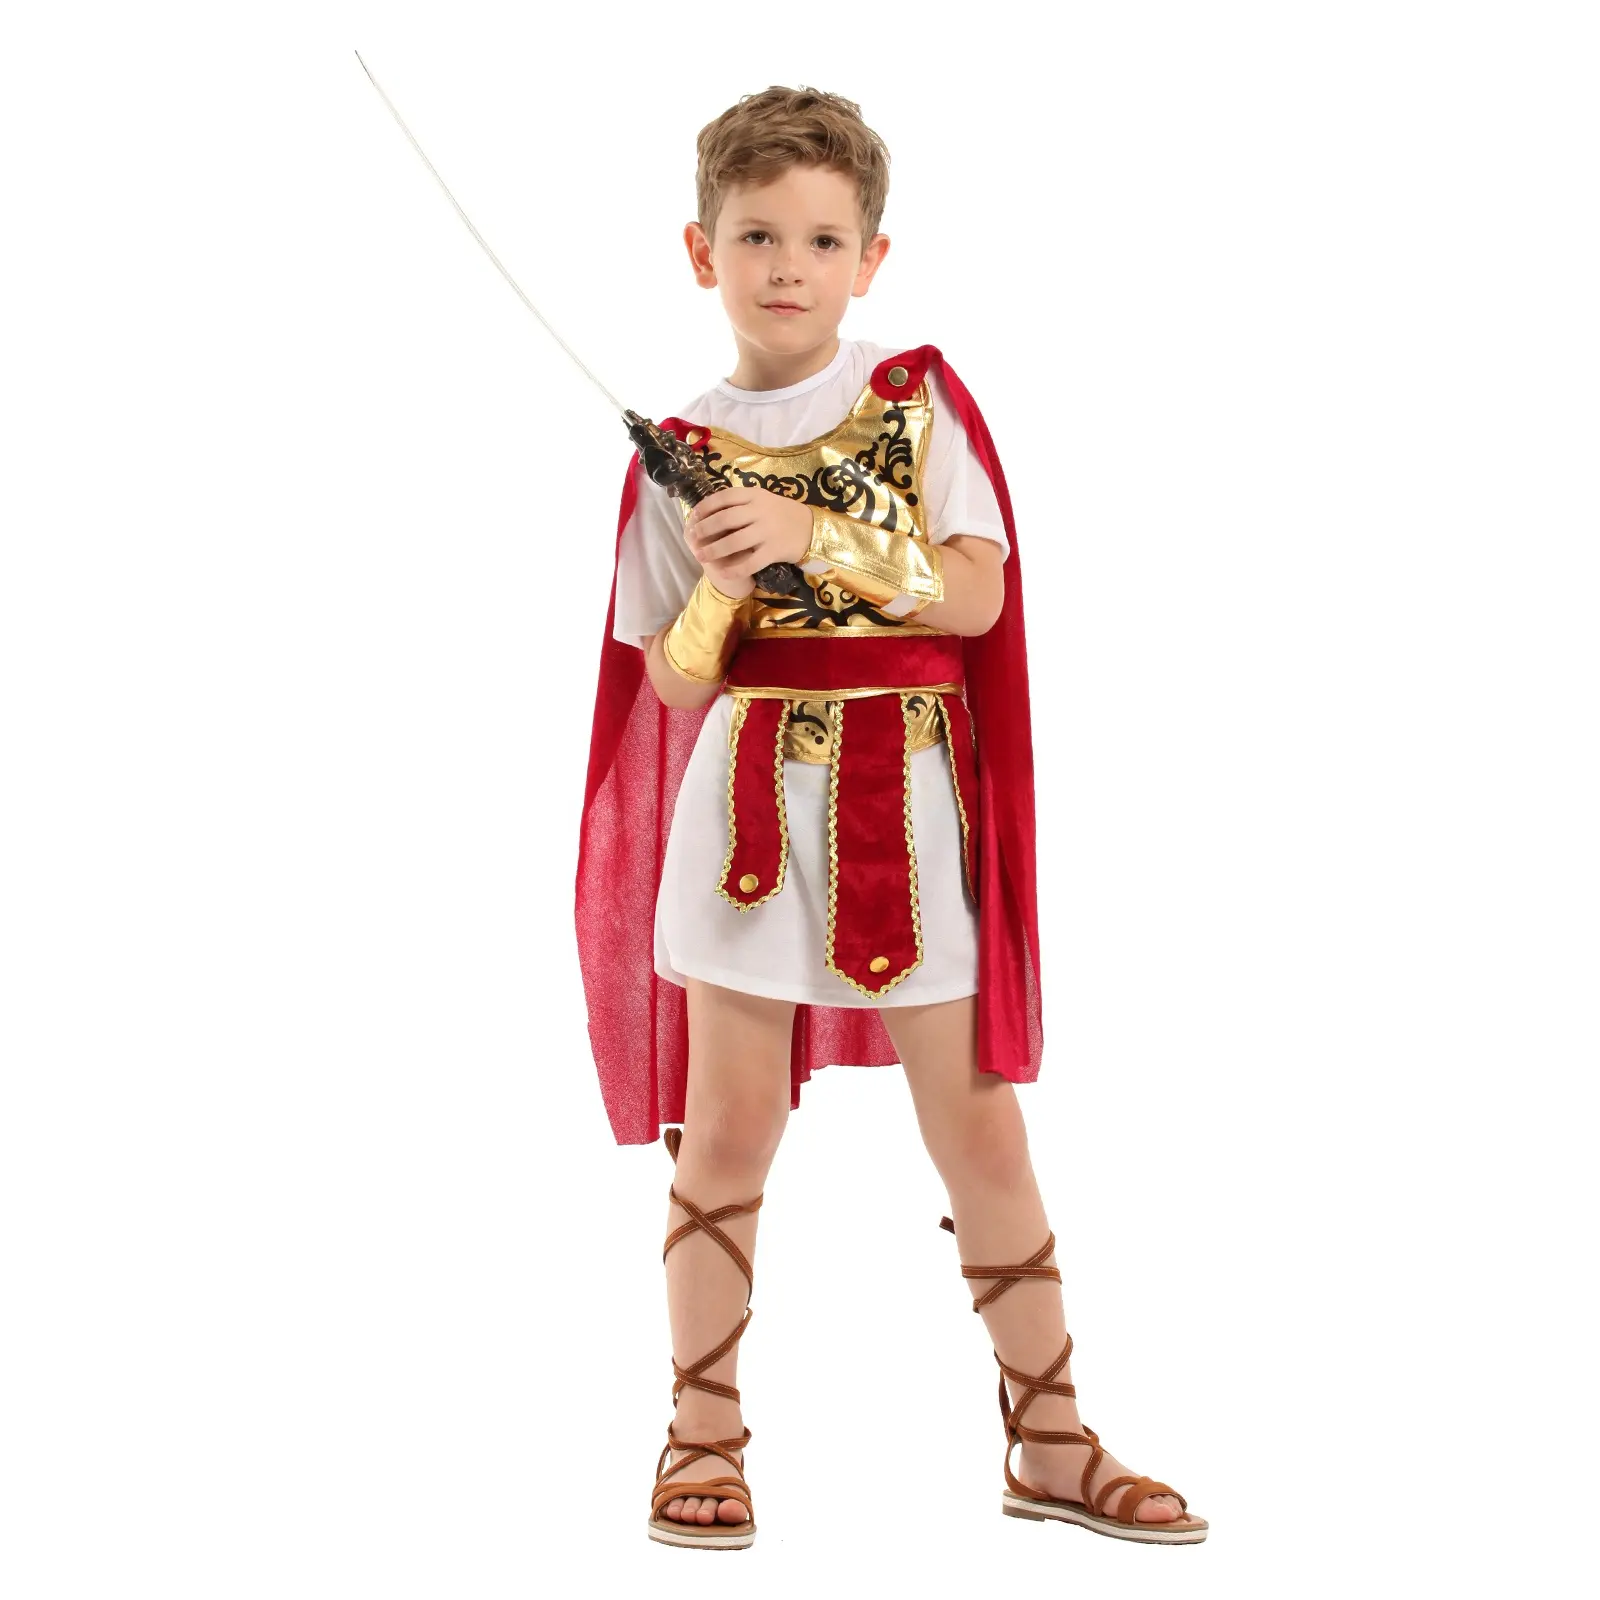 Fantasias infantis de halloween, fantasias para cosplay de guerreiro romano, fantasias para crianças